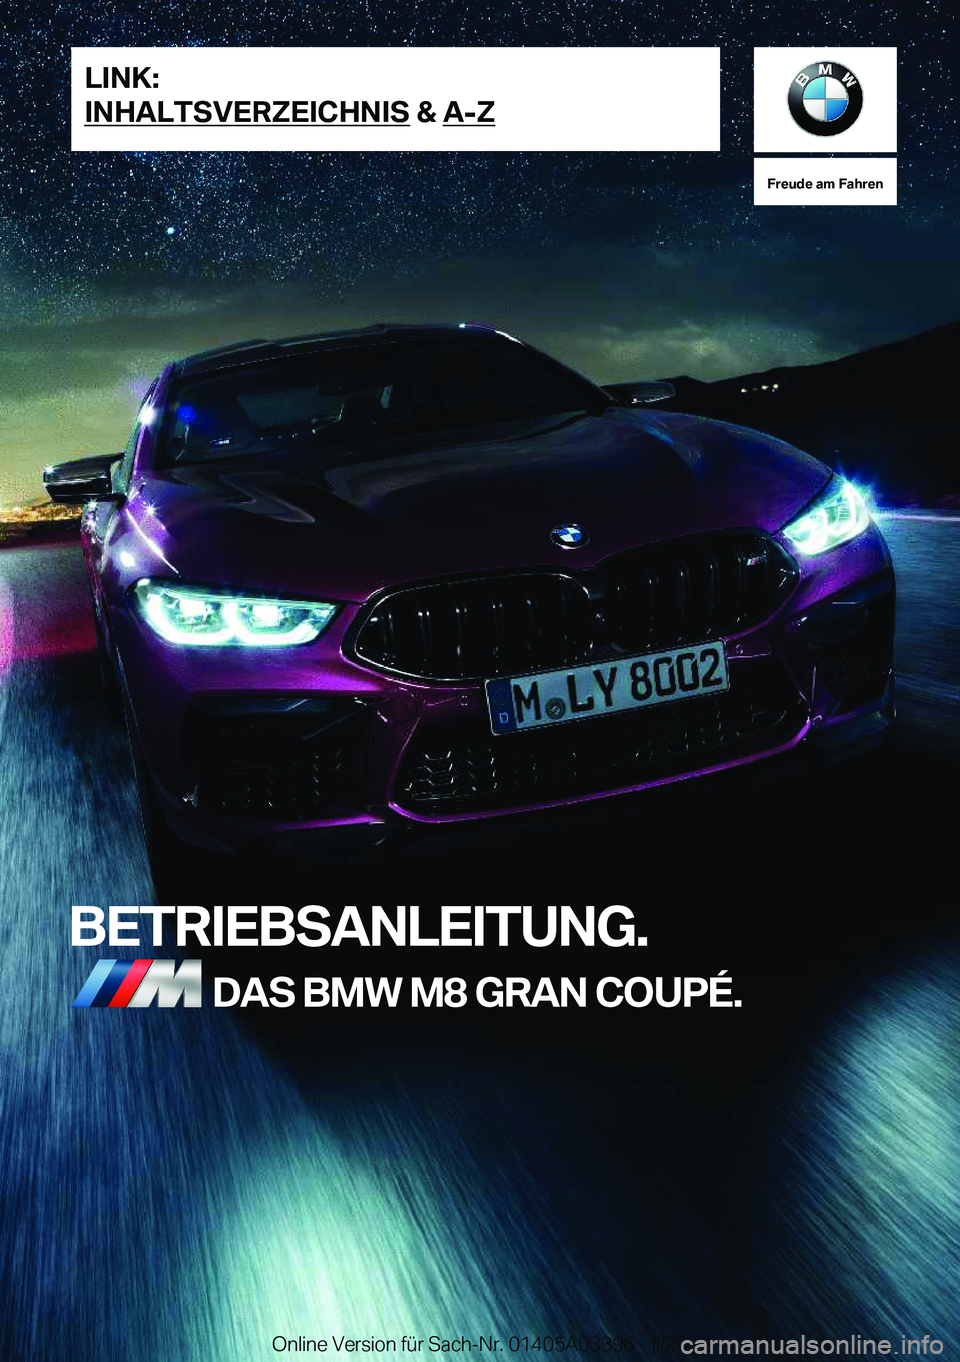 BMW M8 GRAN COUPE 2020  Betriebsanleitungen (in German) �F�r�e�u�d�e��a�m��F�a�h�r�e�n
�B�E�T�R�I�E�B�S�A�N�L�E�I�T�U�N�G�.�D�A�S��B�M�W��M�8��G�R�A�N��C�O�U�P�